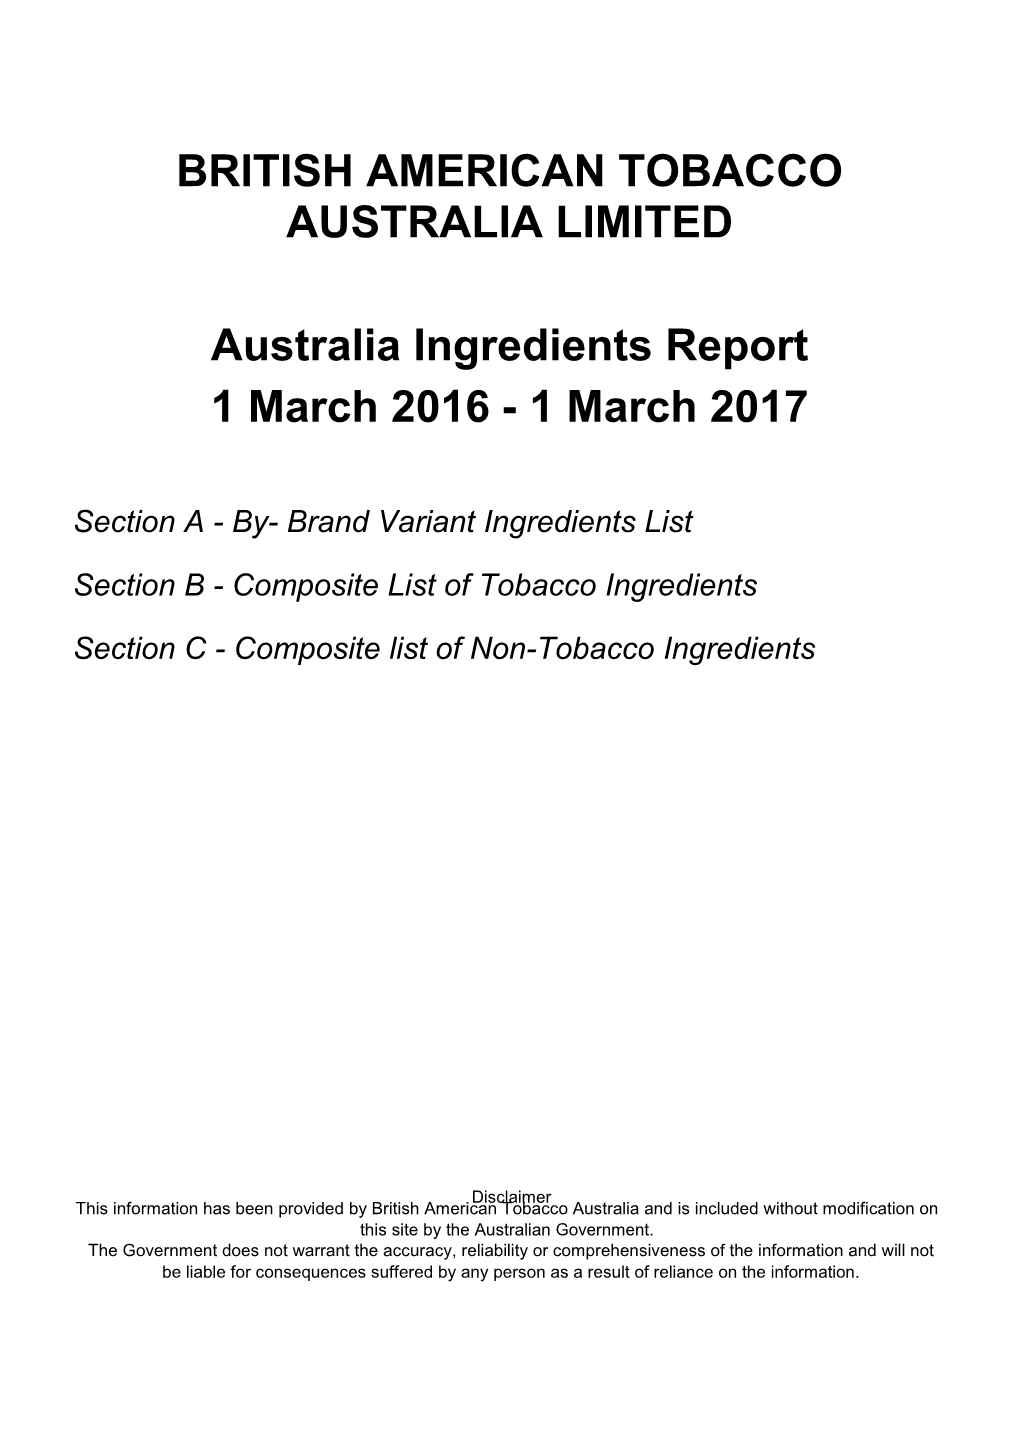 BRITISH AMERICAN TOBACCO AUSTRALIA LIMITED Australia Ingredients Report 1 March 2016